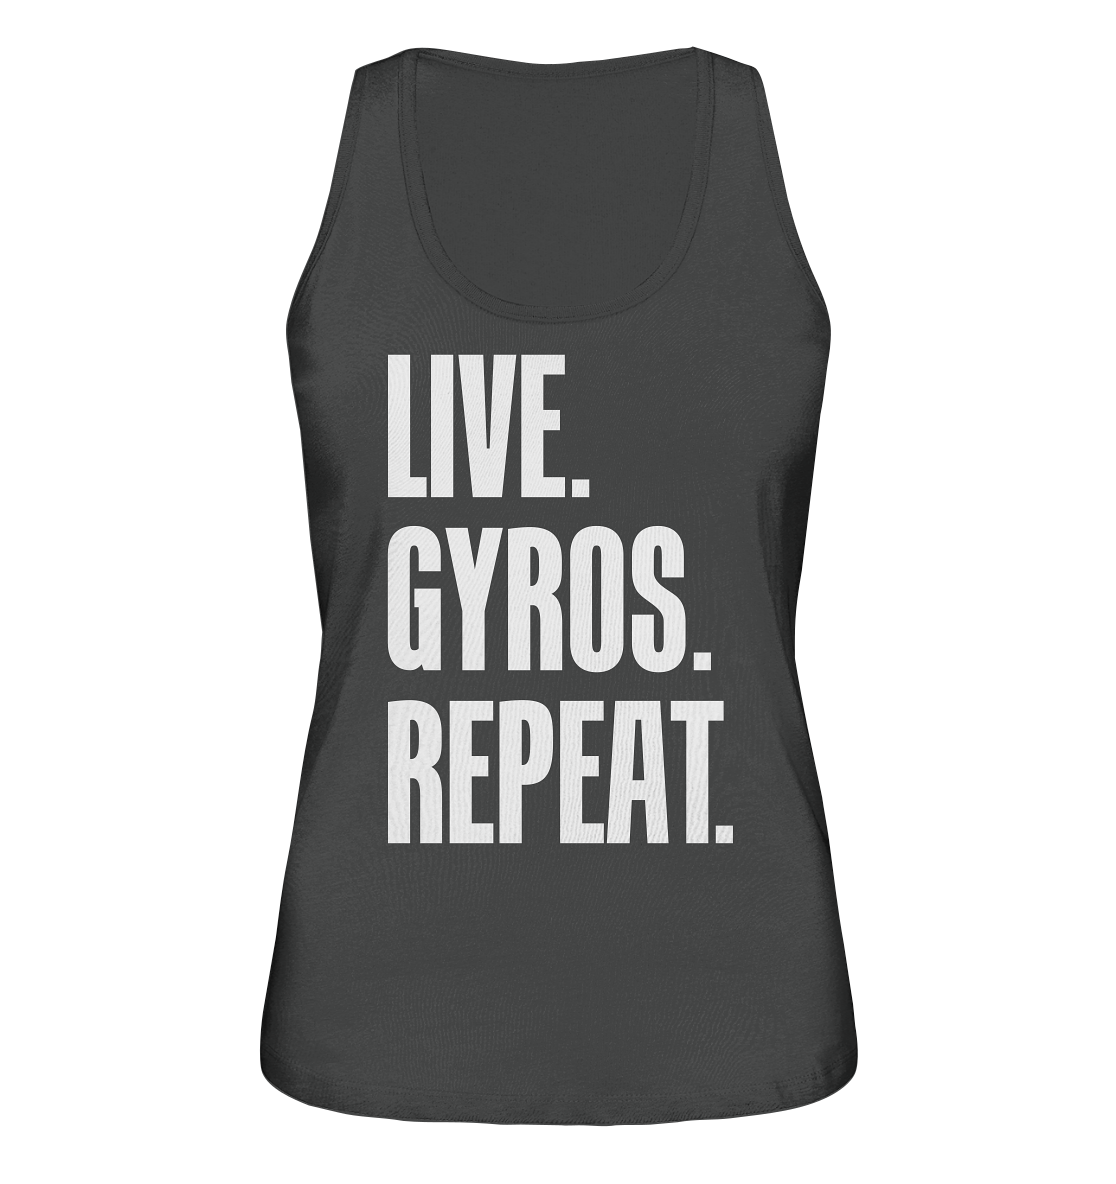 LIVE. GYROS. REPEAT. - Ladies organic tank top